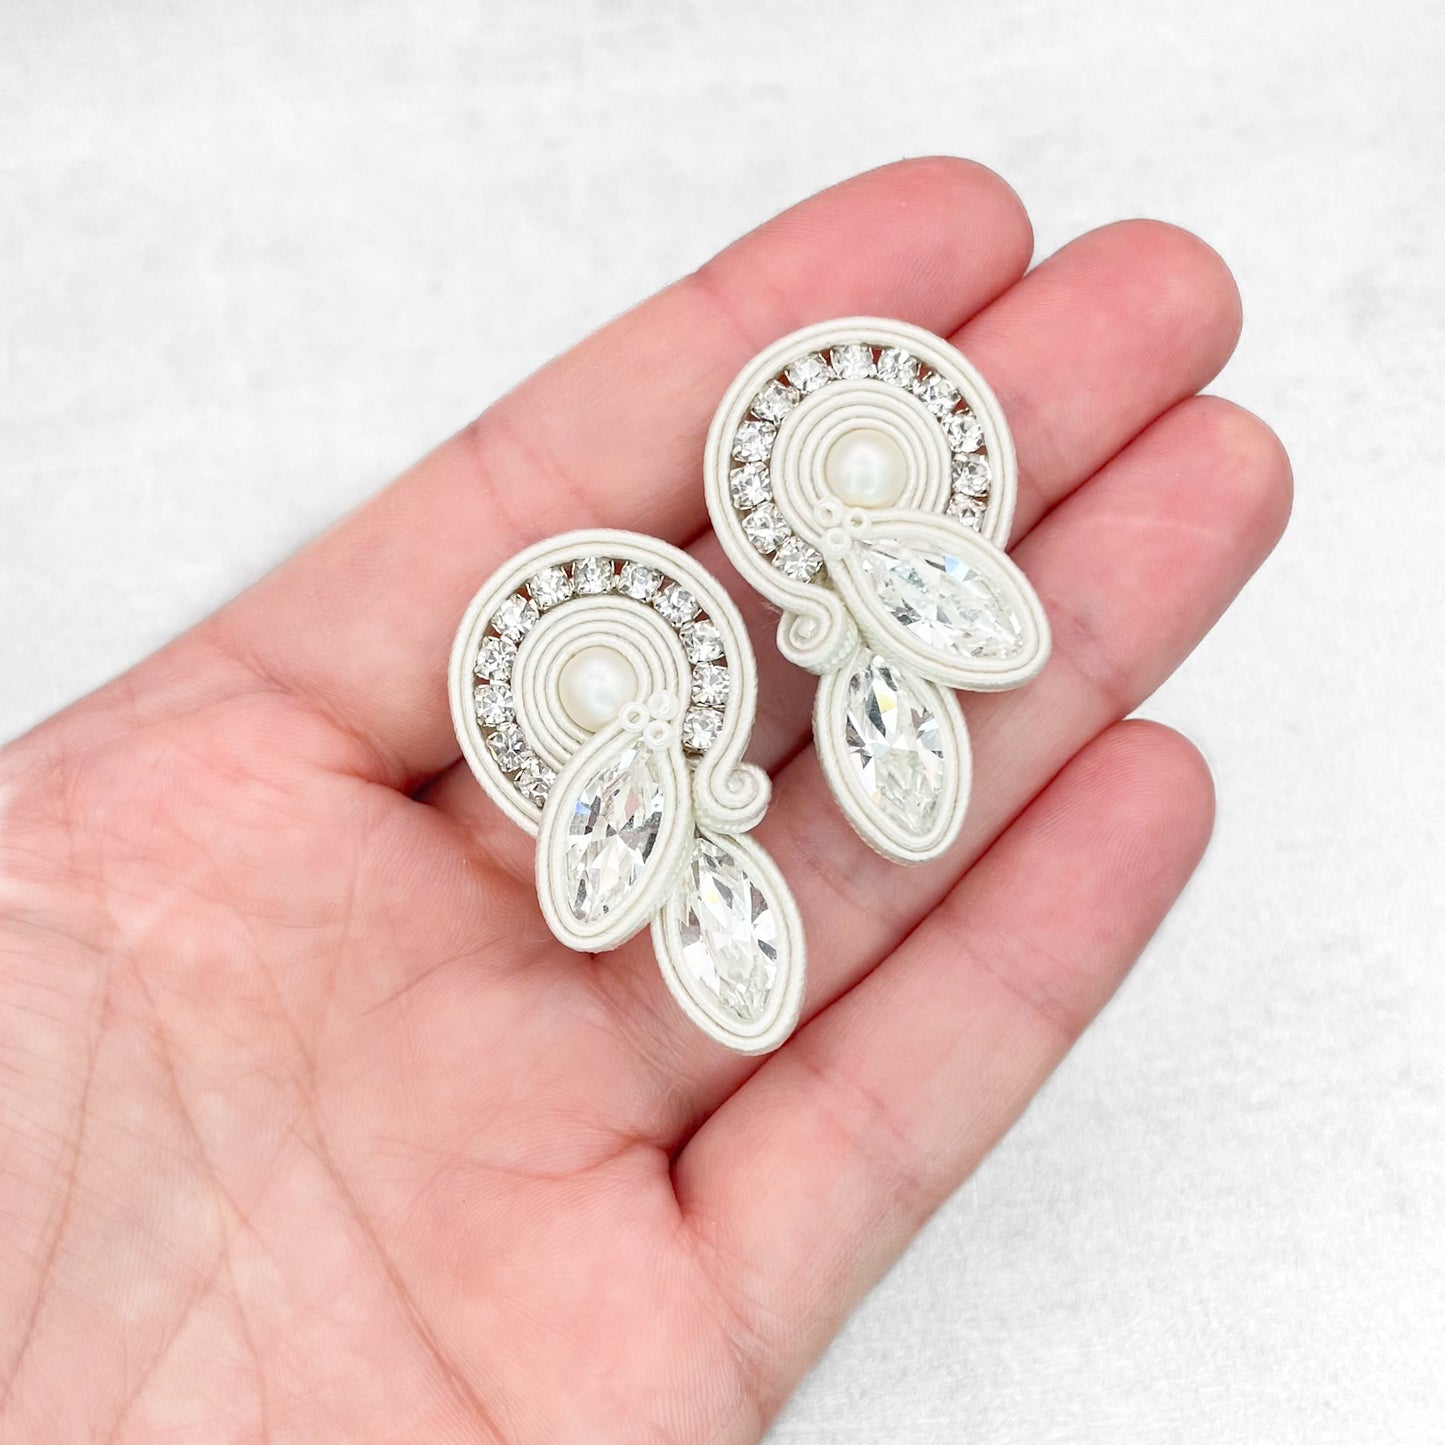 Bridal earrings. Handmade soutache earrings. Delicate and lightweight ivory earrings.